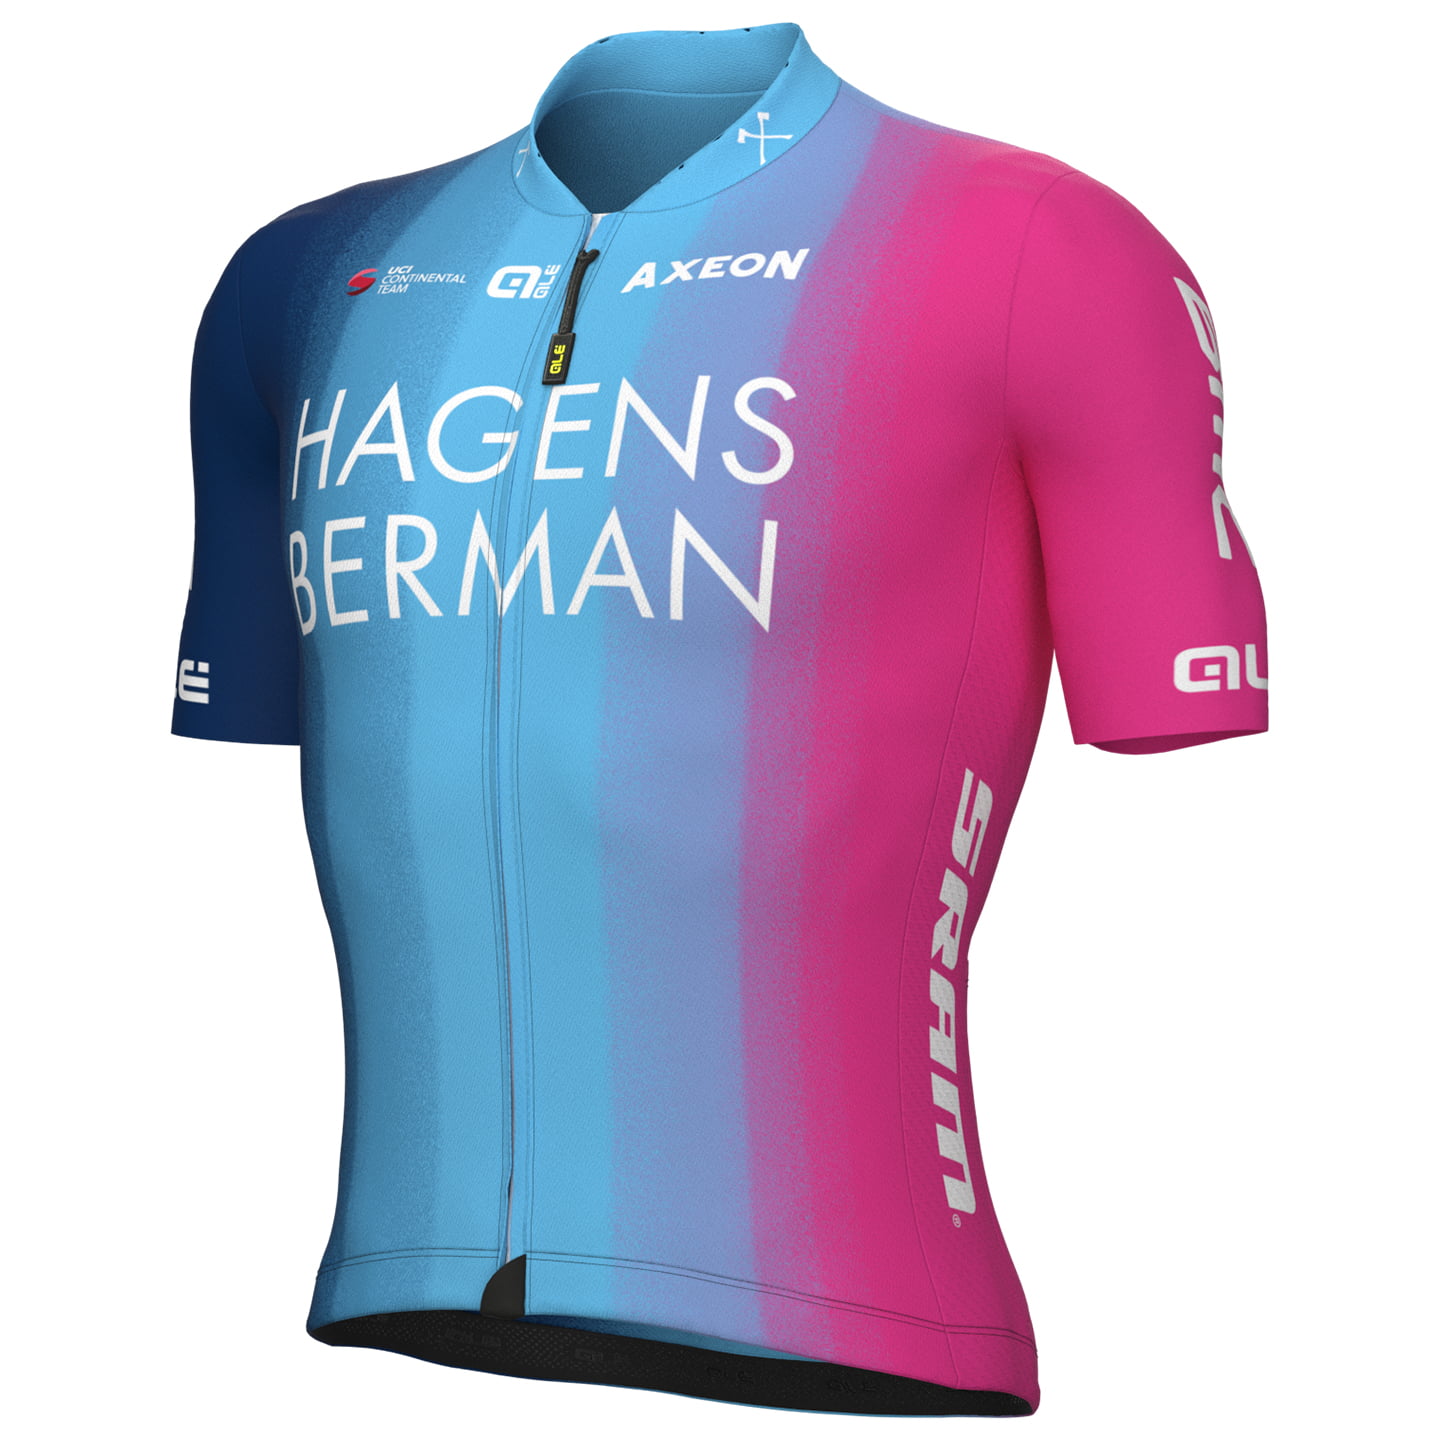 HAGENS BERMAN AXEON 2022 Short Sleeve Jersey, for men, size 3XL, Bike shirt, Cycling gear